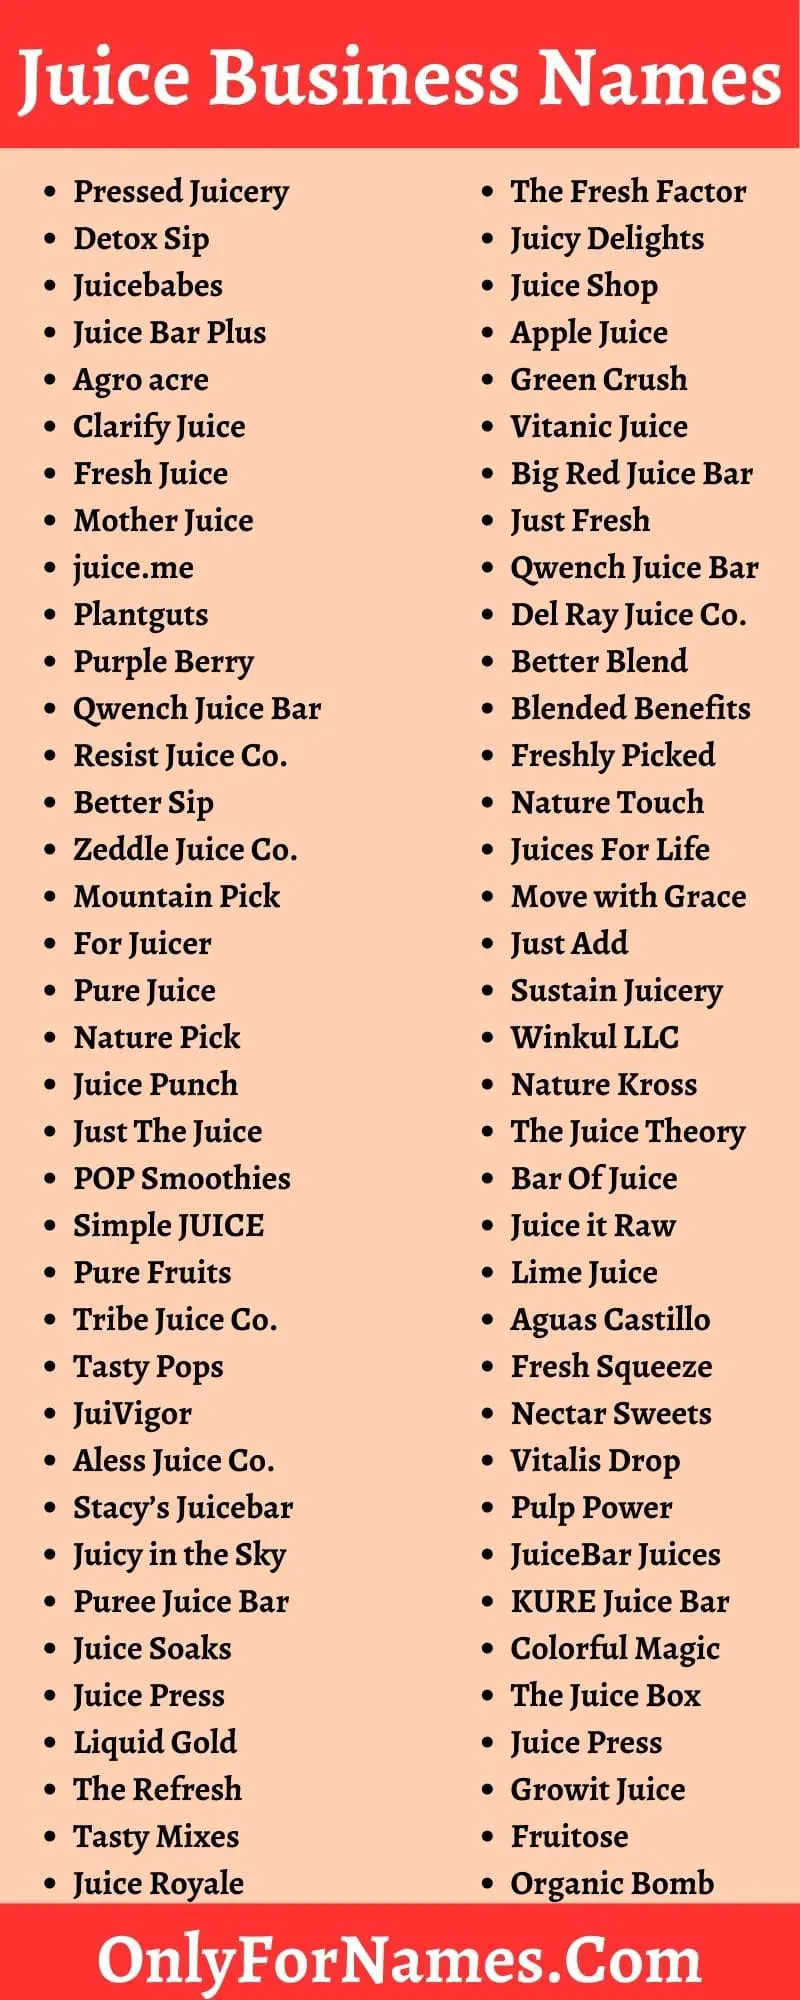 Juice Business Names